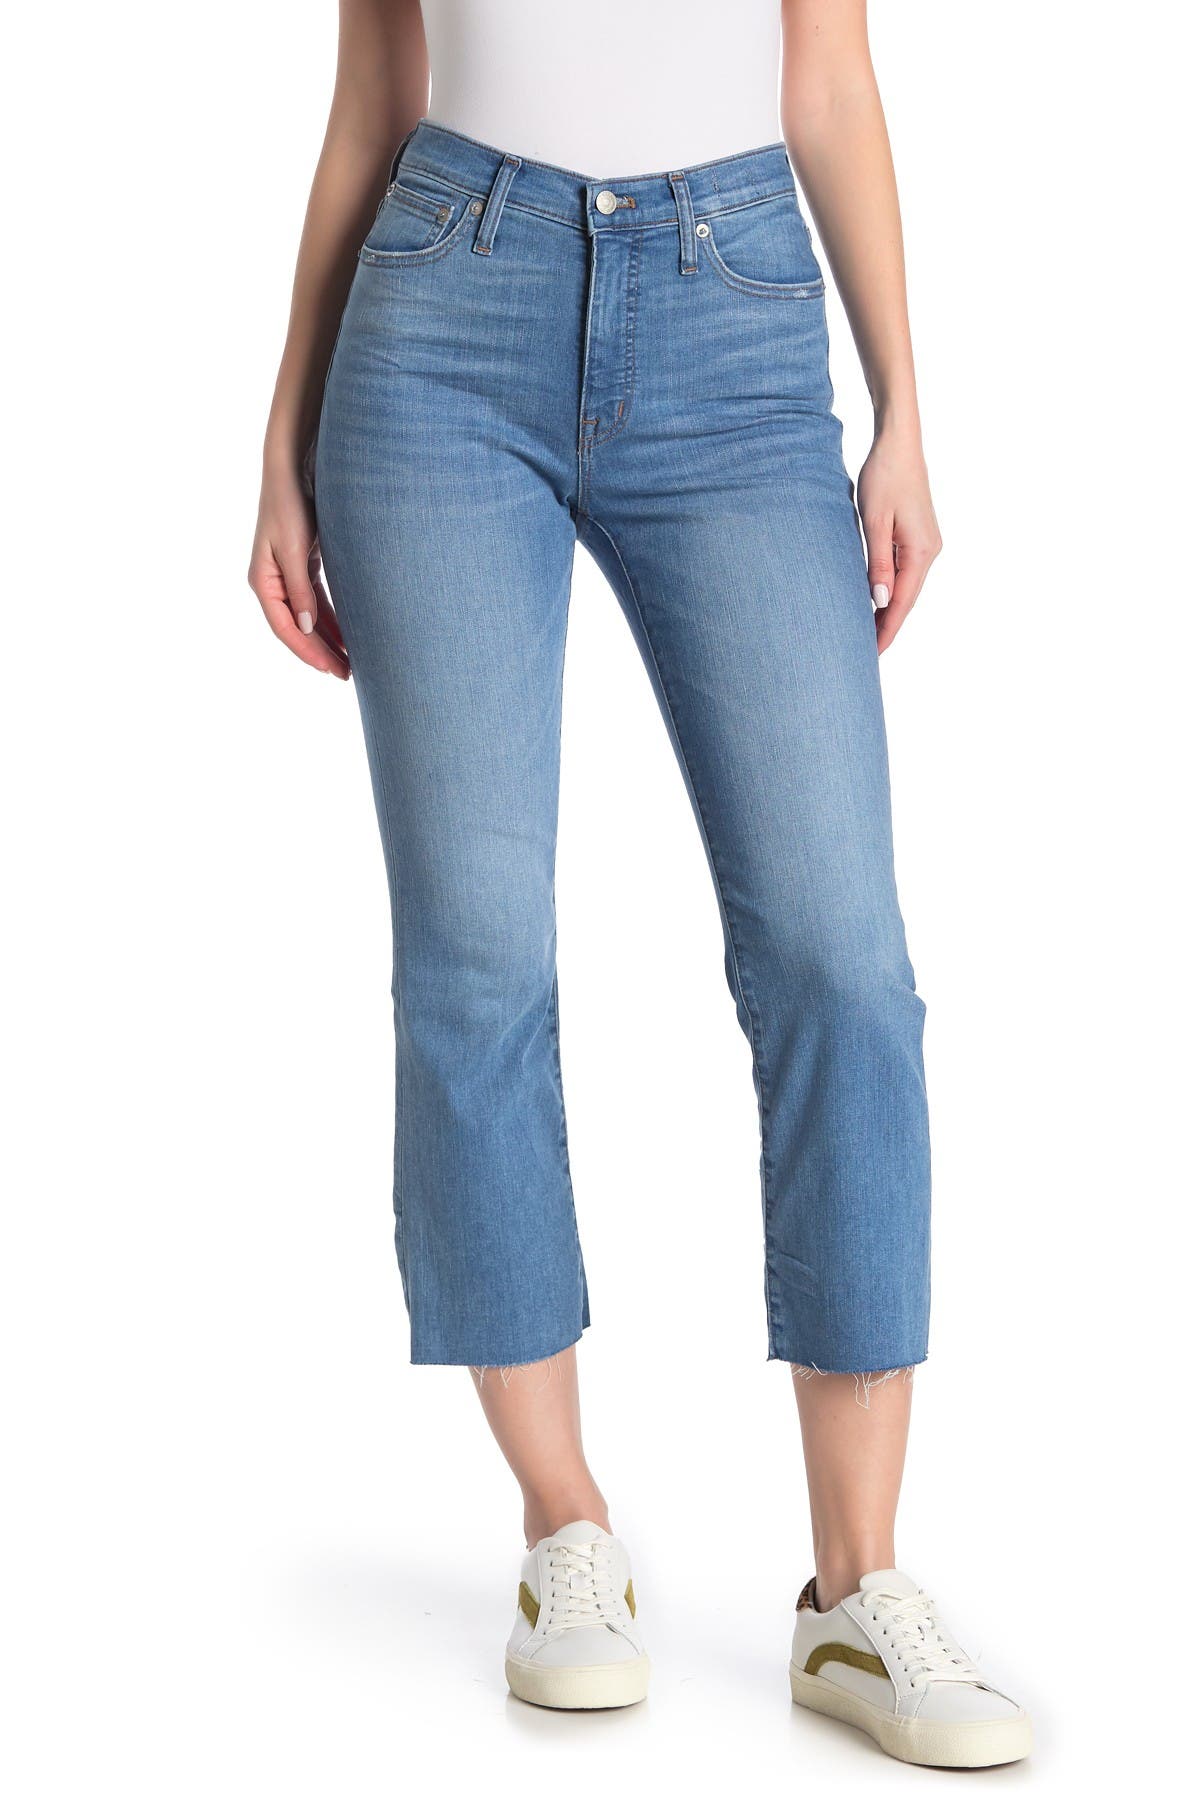 madewell cali demi bootcut crop jeans